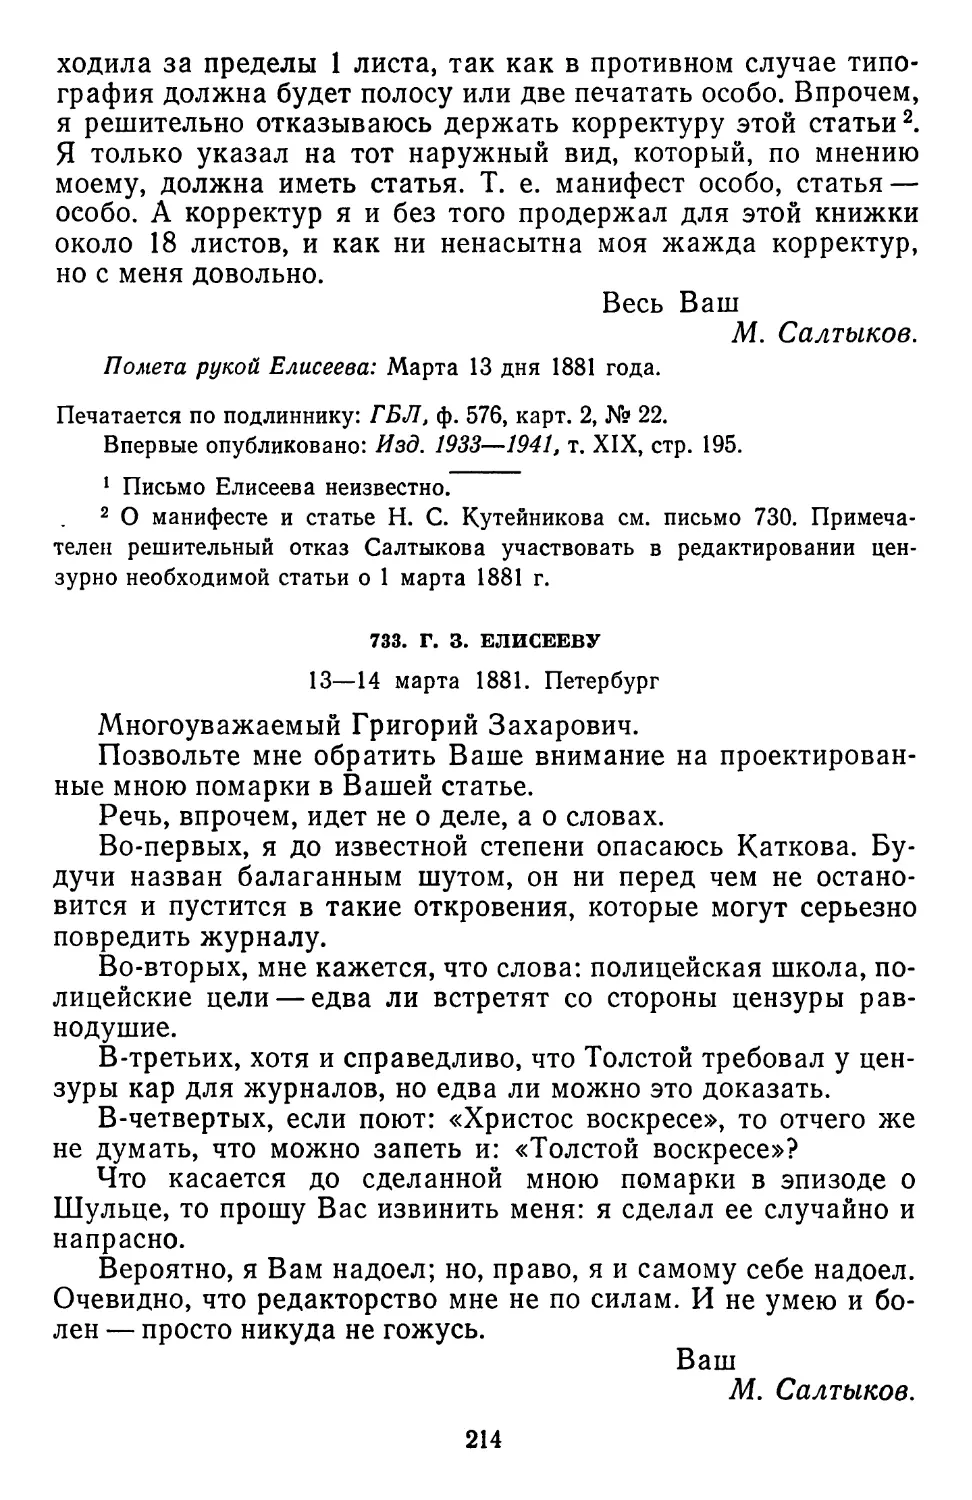 733.Г. 3. Елисееву. 13—14 марта1881. Петербург